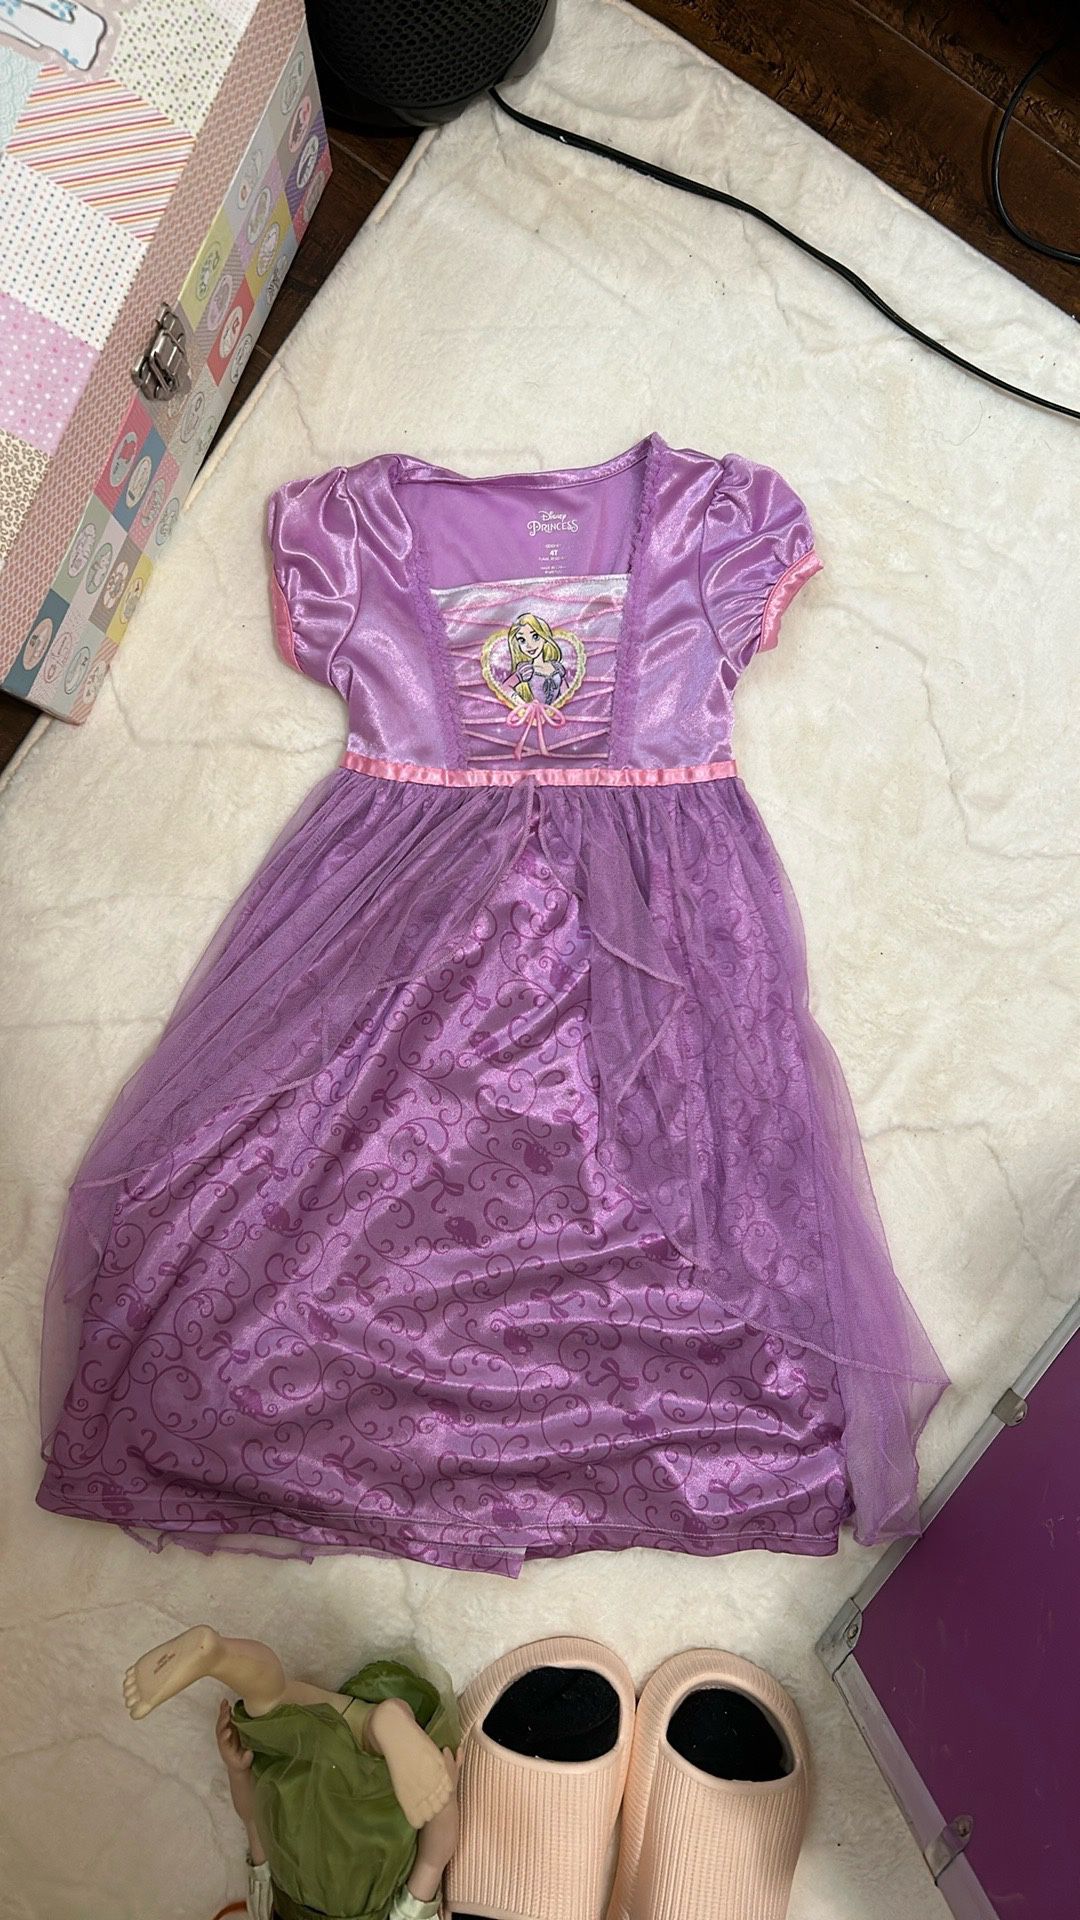 4t Rapunzel Nightgown dress 